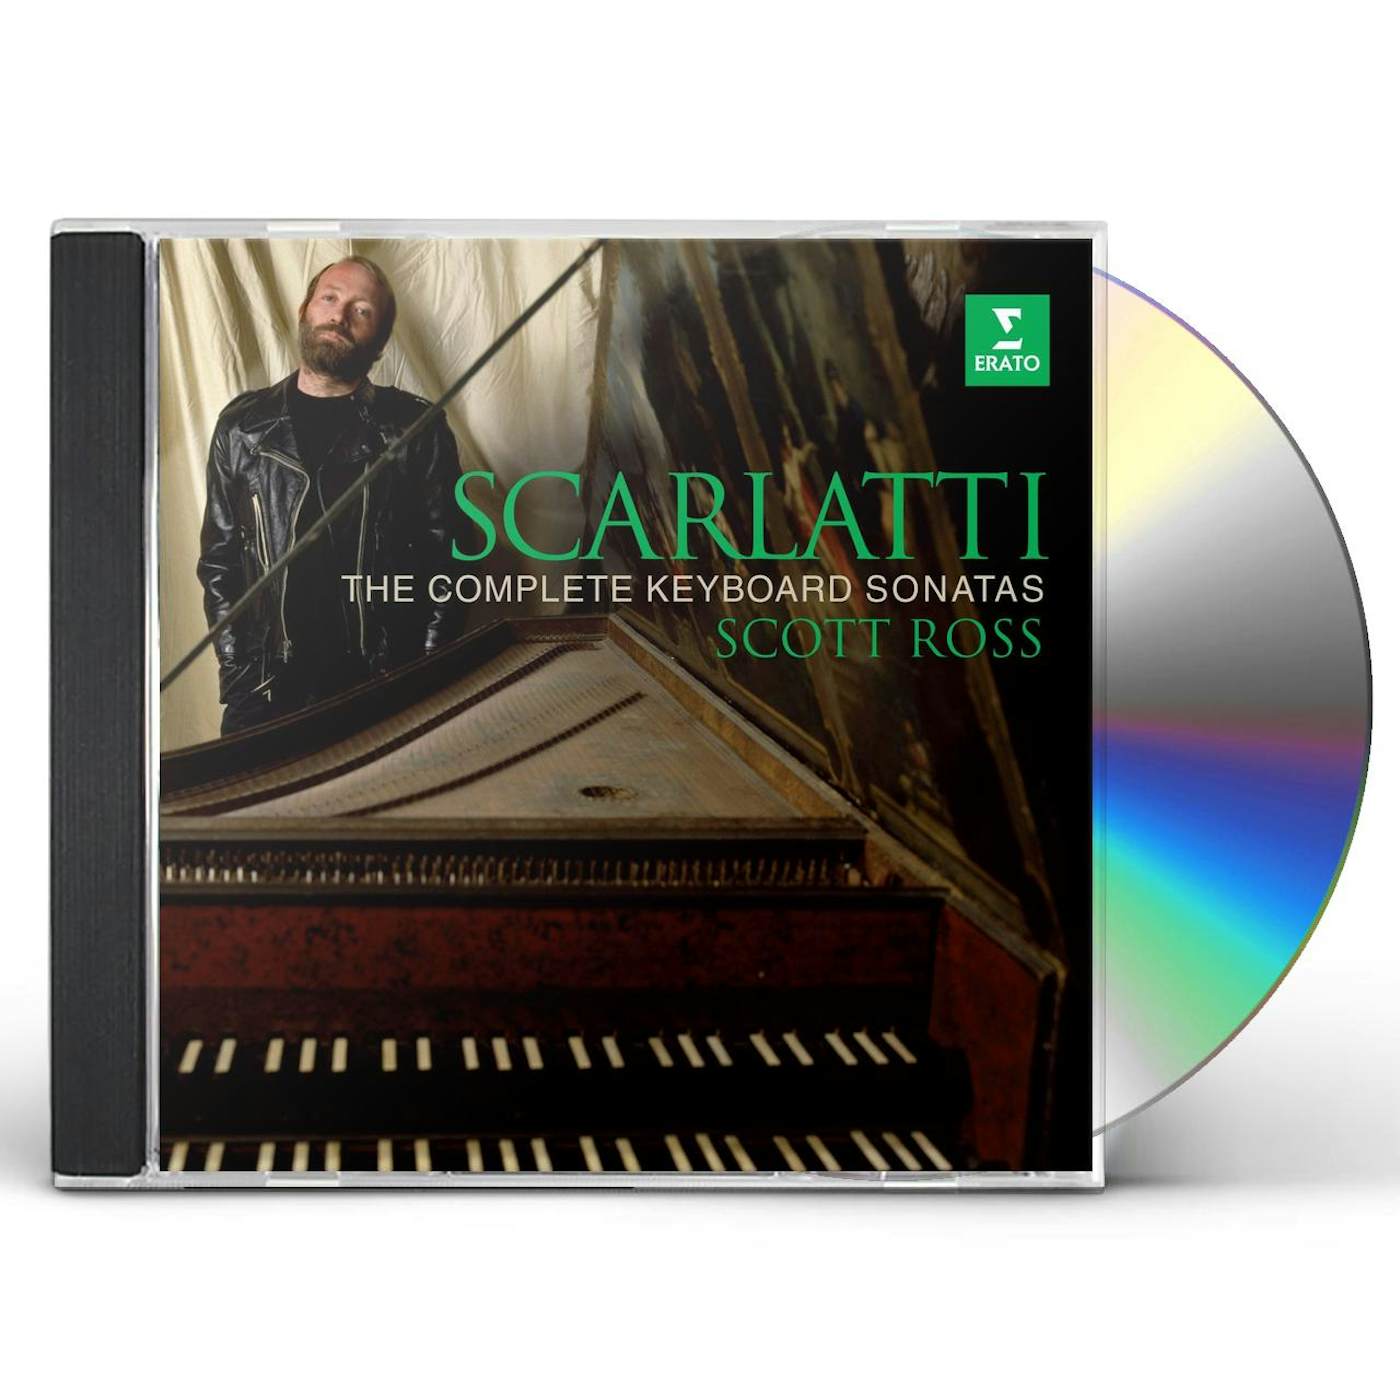 Scarlatti COMP KEYBOARD WORKS CD